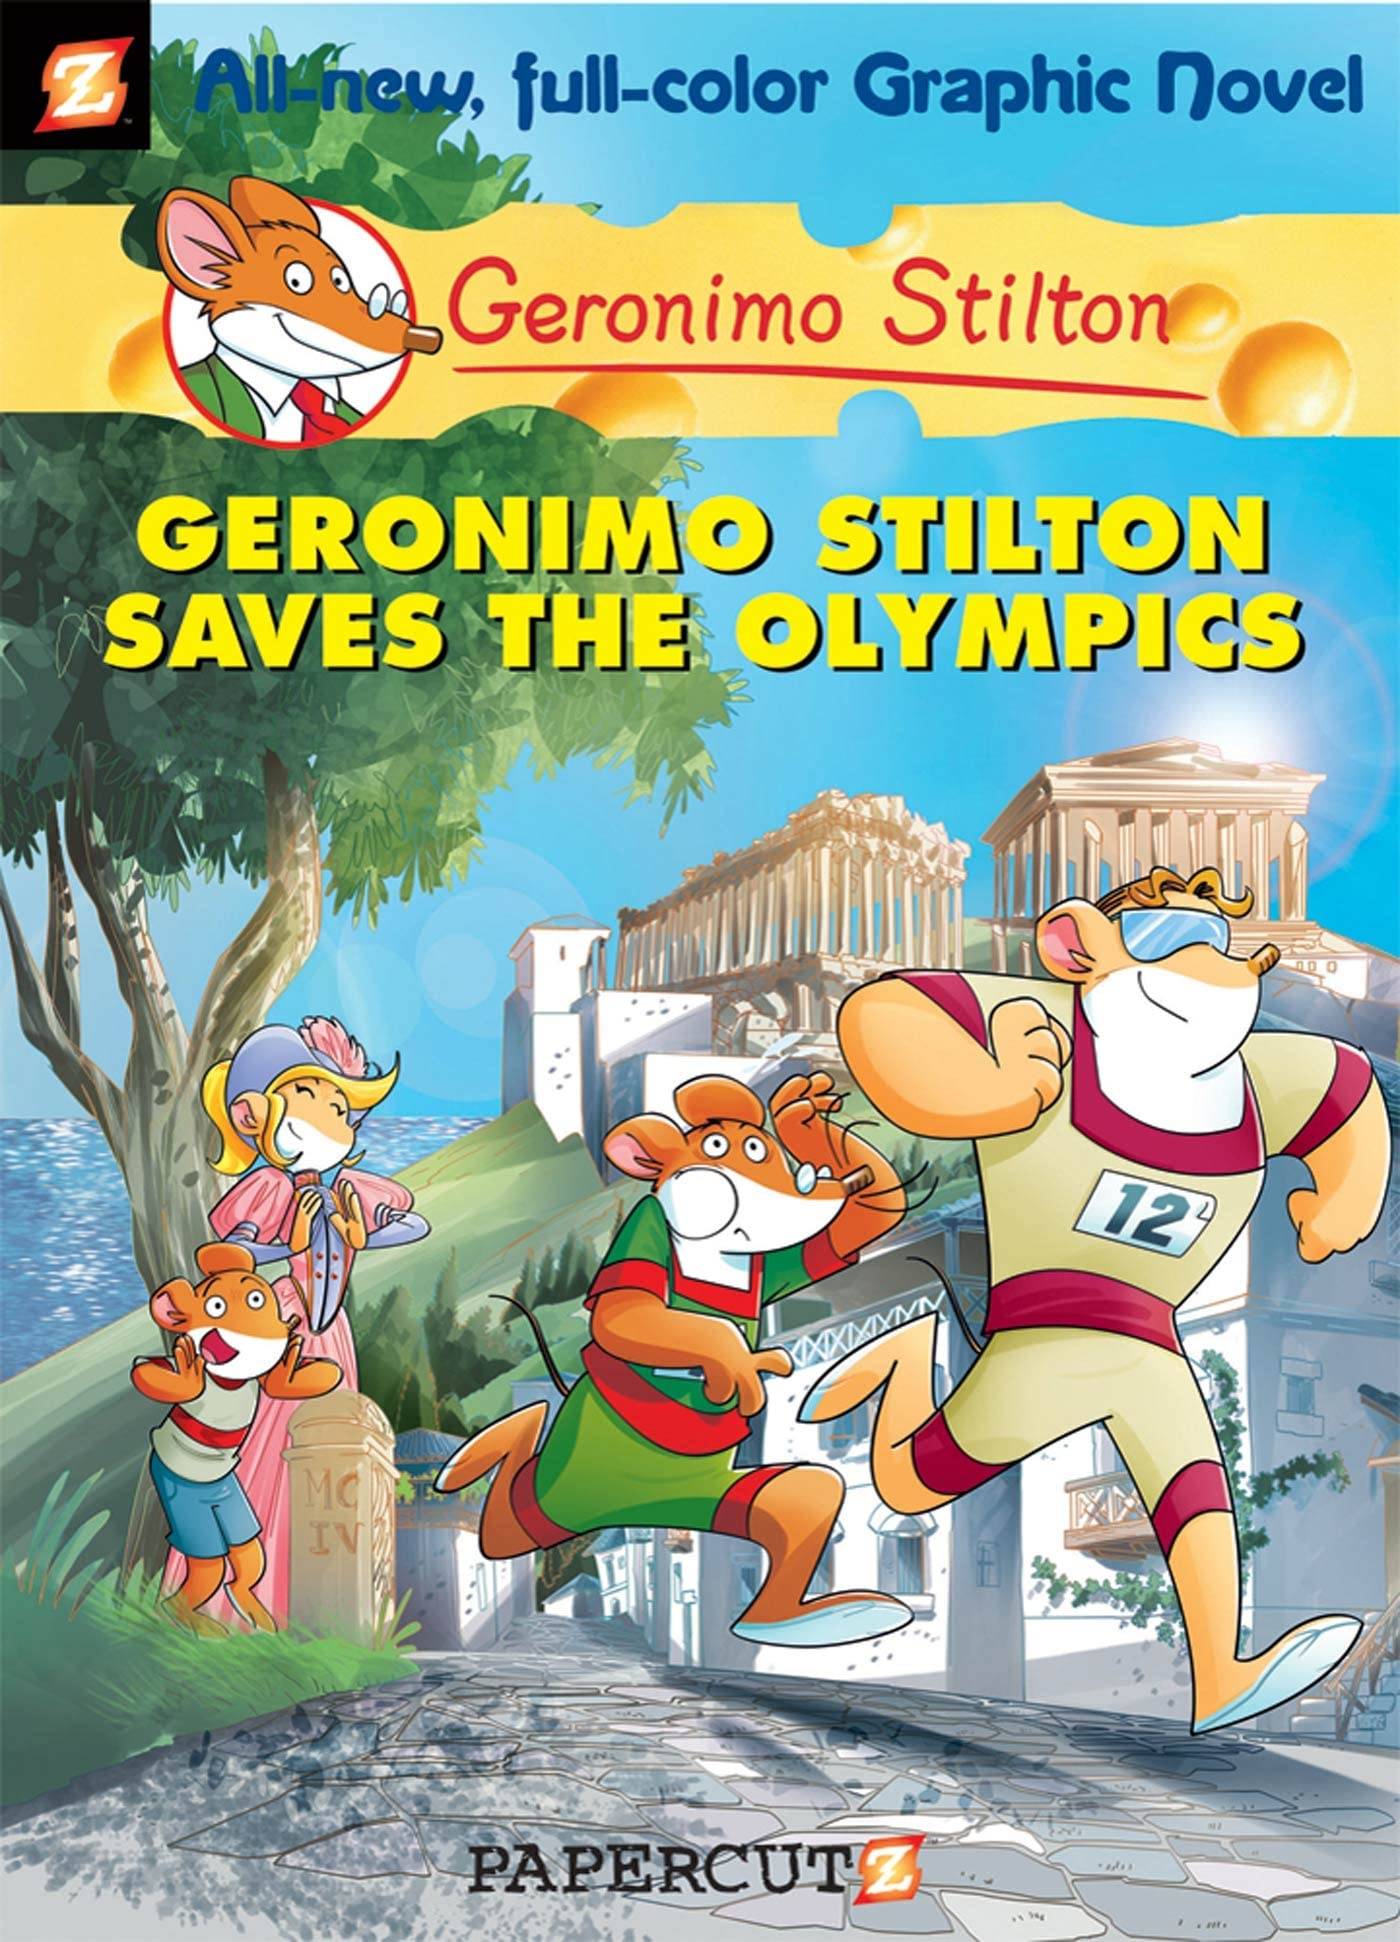 IMG : Geronimo Stilton Geronimo Stilton Saves the Olympics